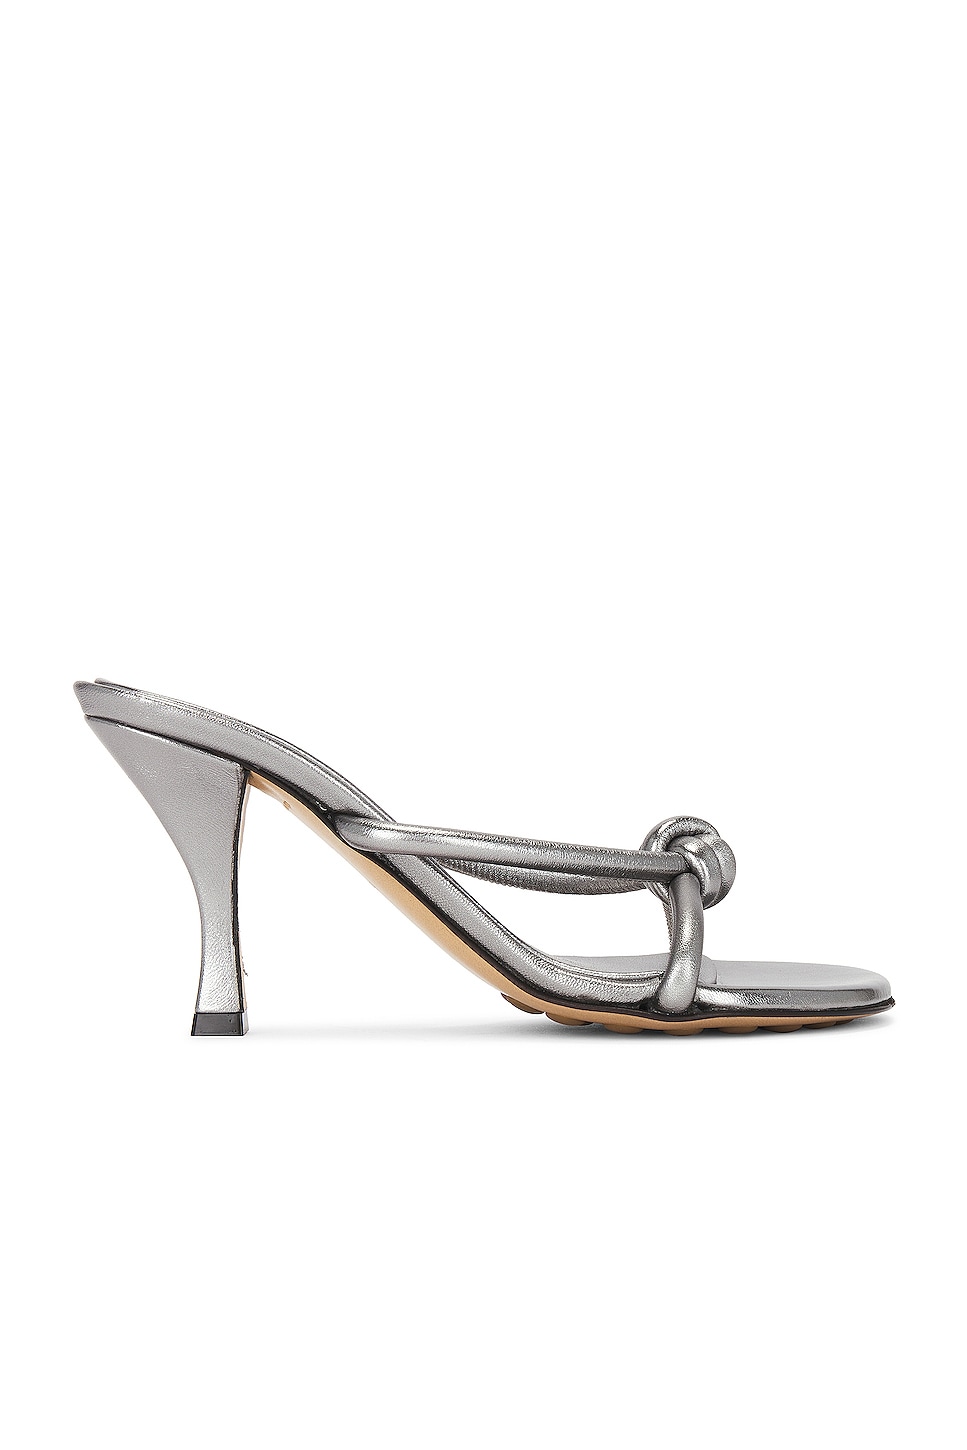 Image 1 of Bottega Veneta Metallic Blink Mule Sandal in Silver